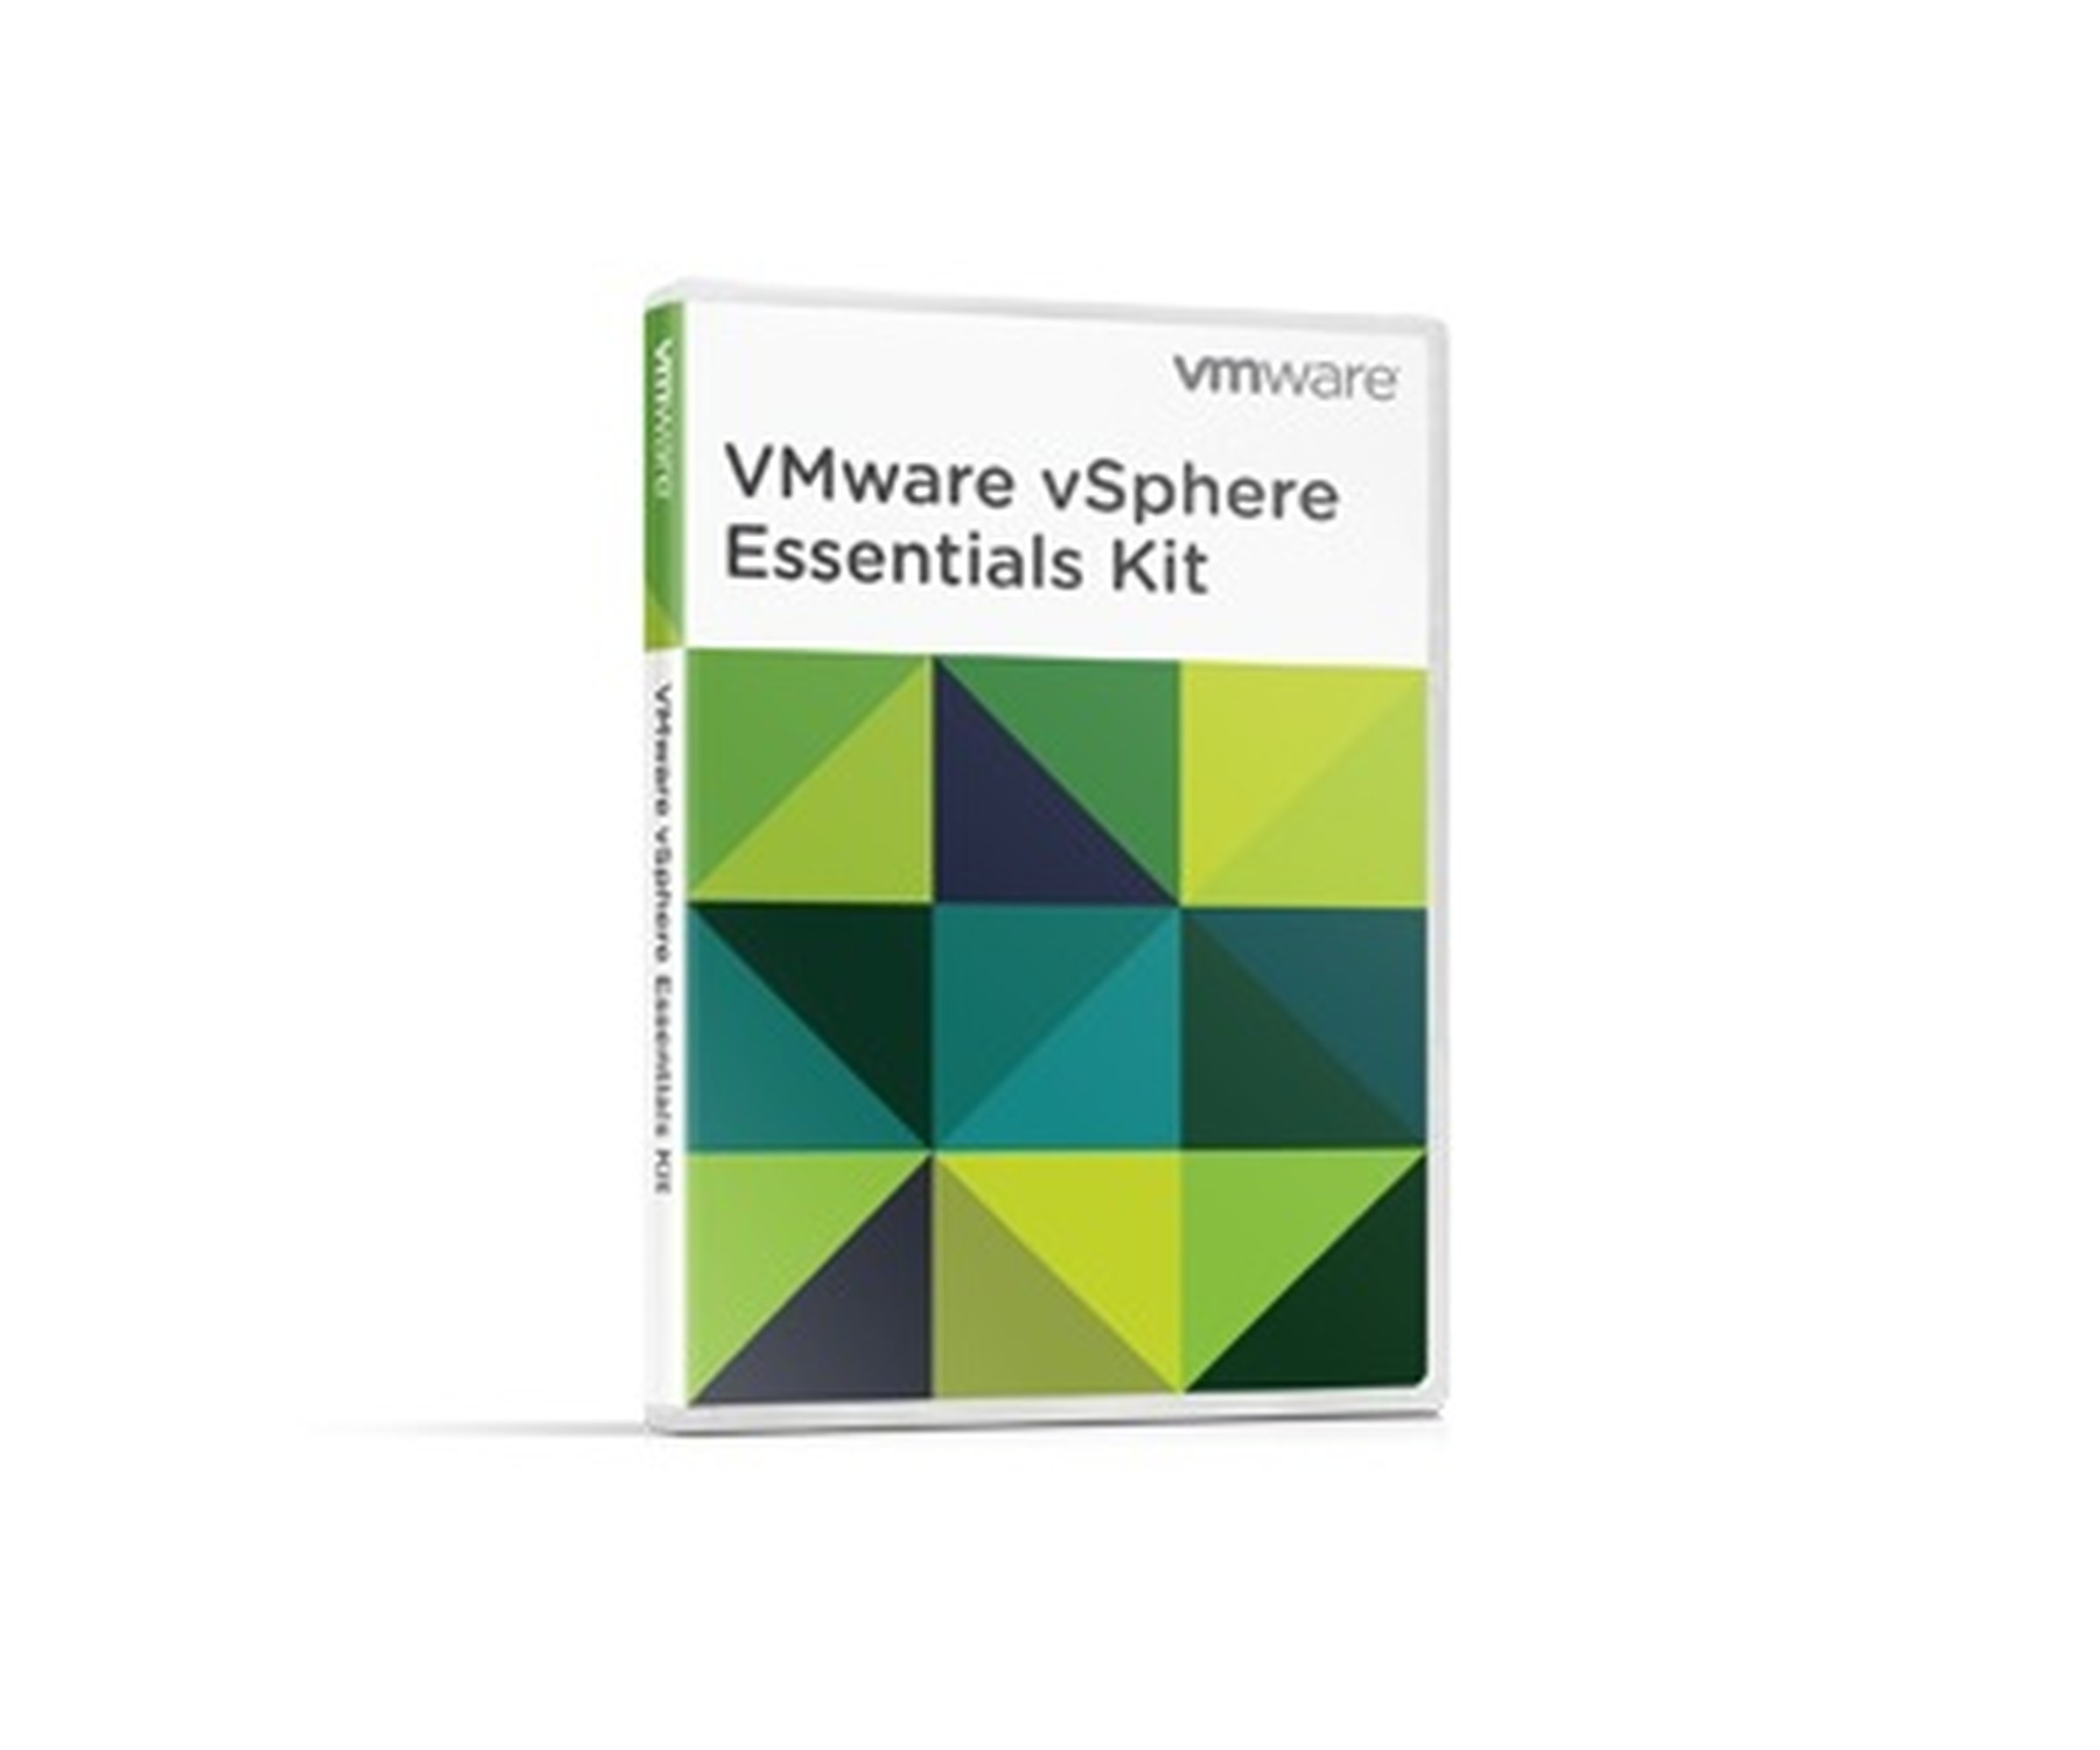 Fujitsu VMware vSphere Essentials Plus Kit - Lizenz - 6 CPU